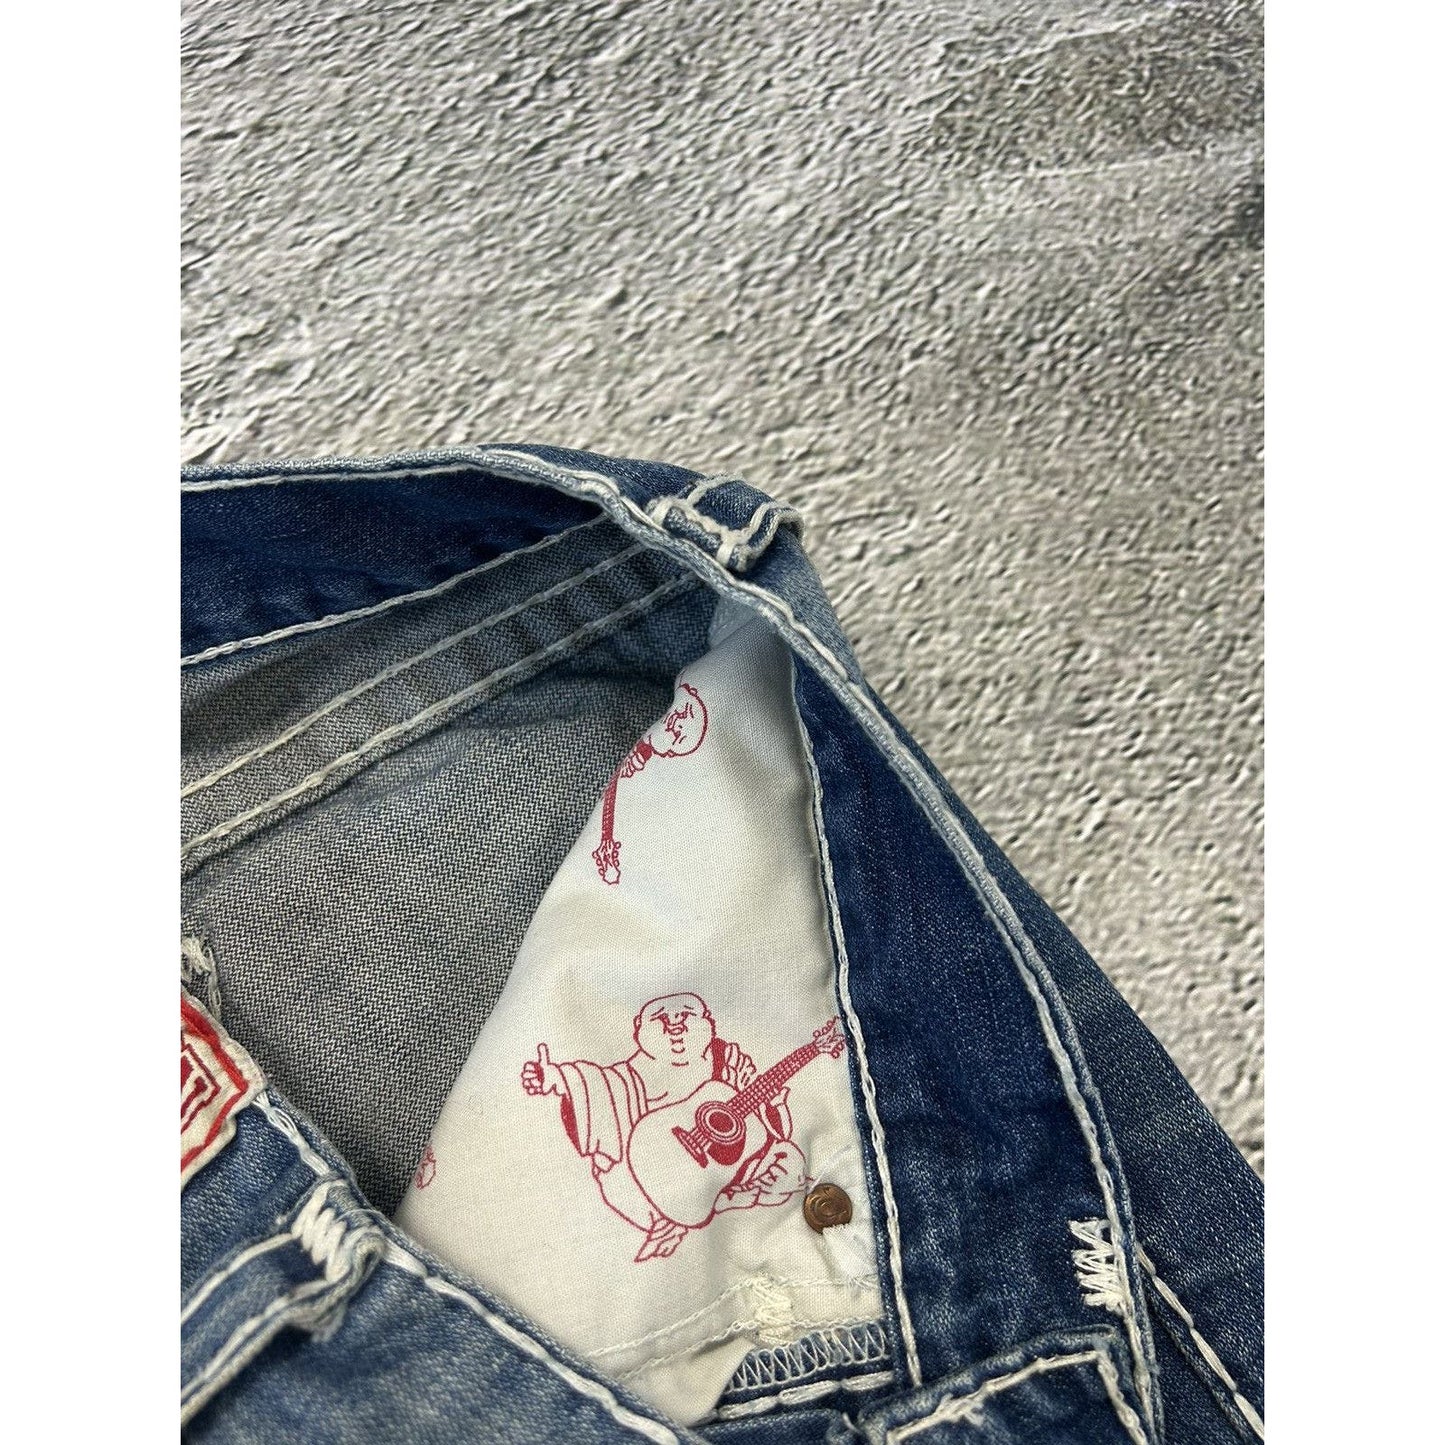 True Religion blue jeans white thick stitching Y2K